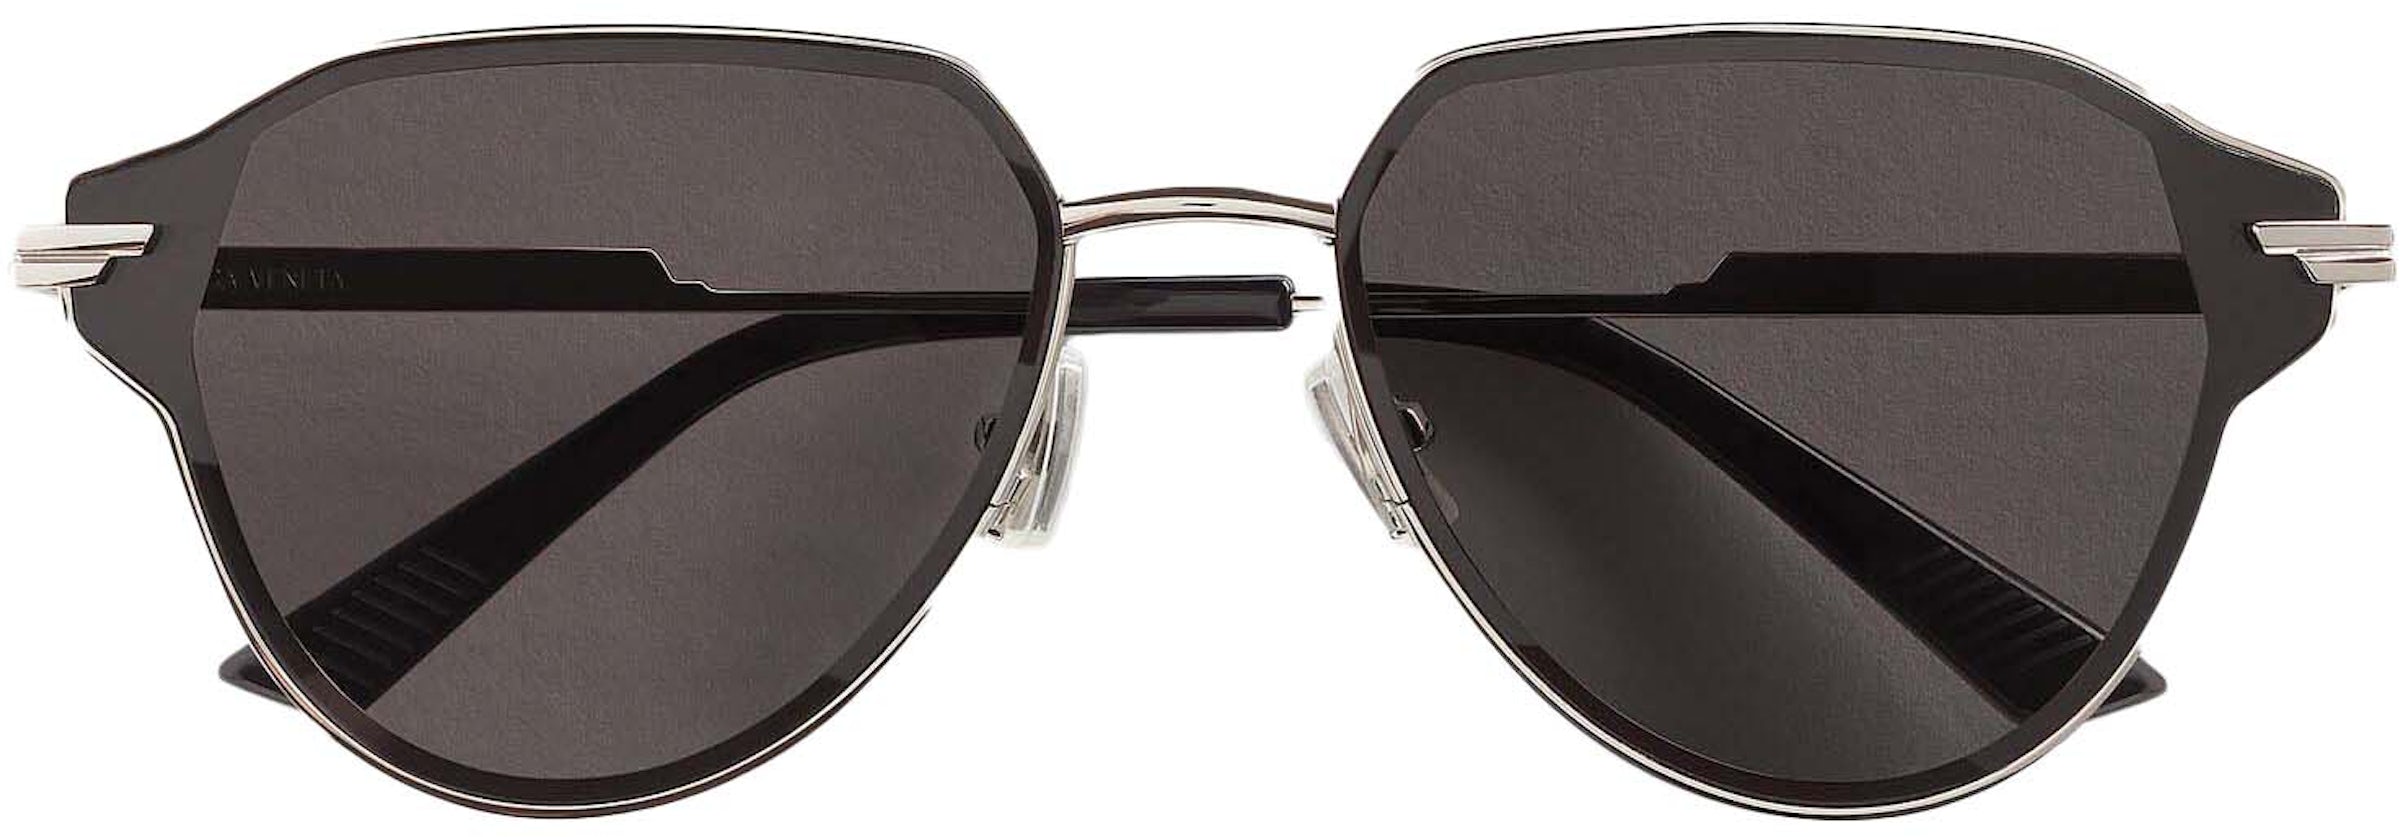 Louis Vuitton The LV Round Sunglasses Silver/Black (Z1764U) in Silver Metal  - US